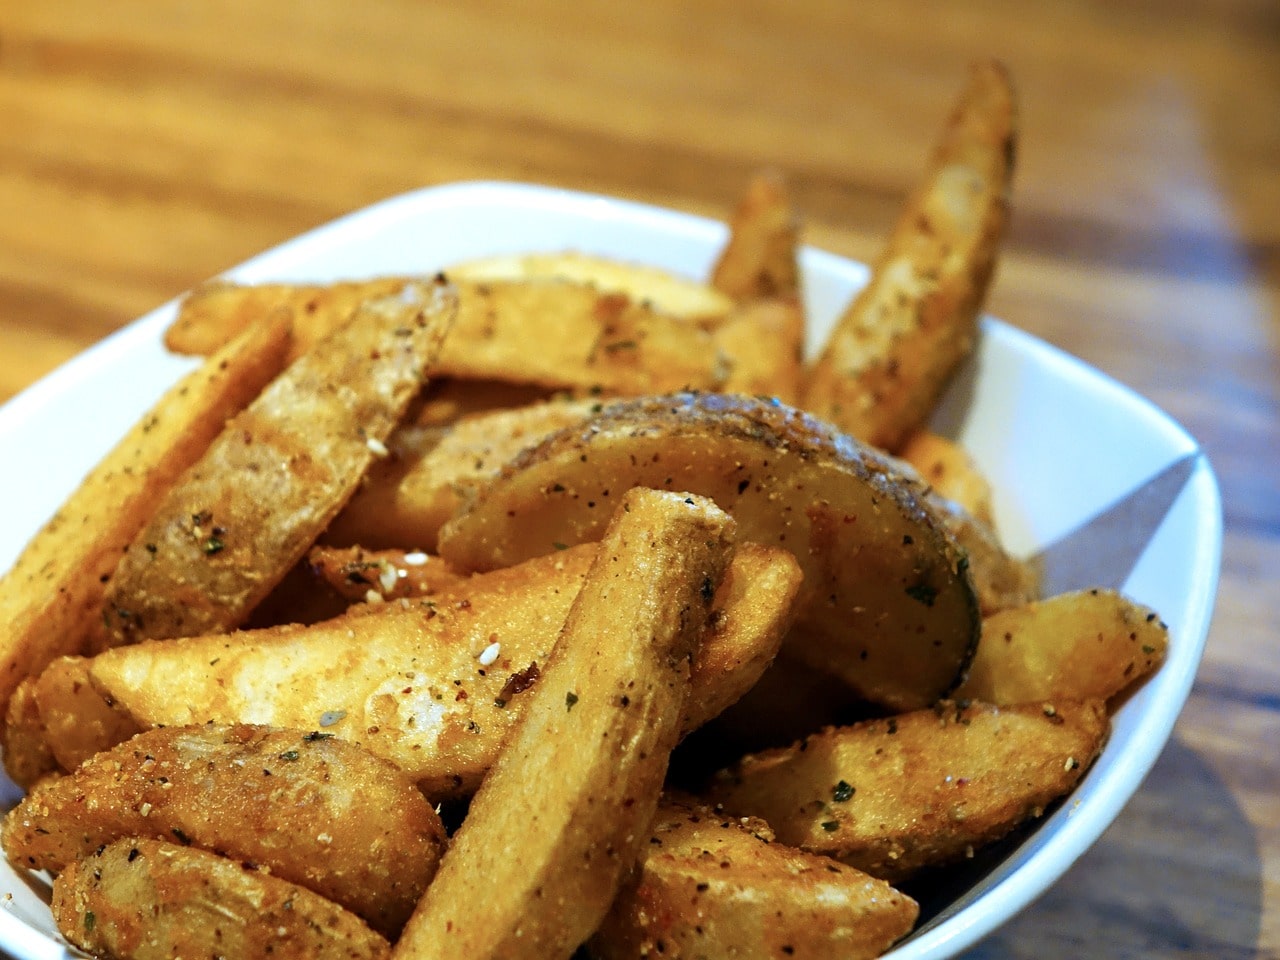 Resep Potato Wedges Sederhana, Gambar oleh Jason Goh dari Pixabay